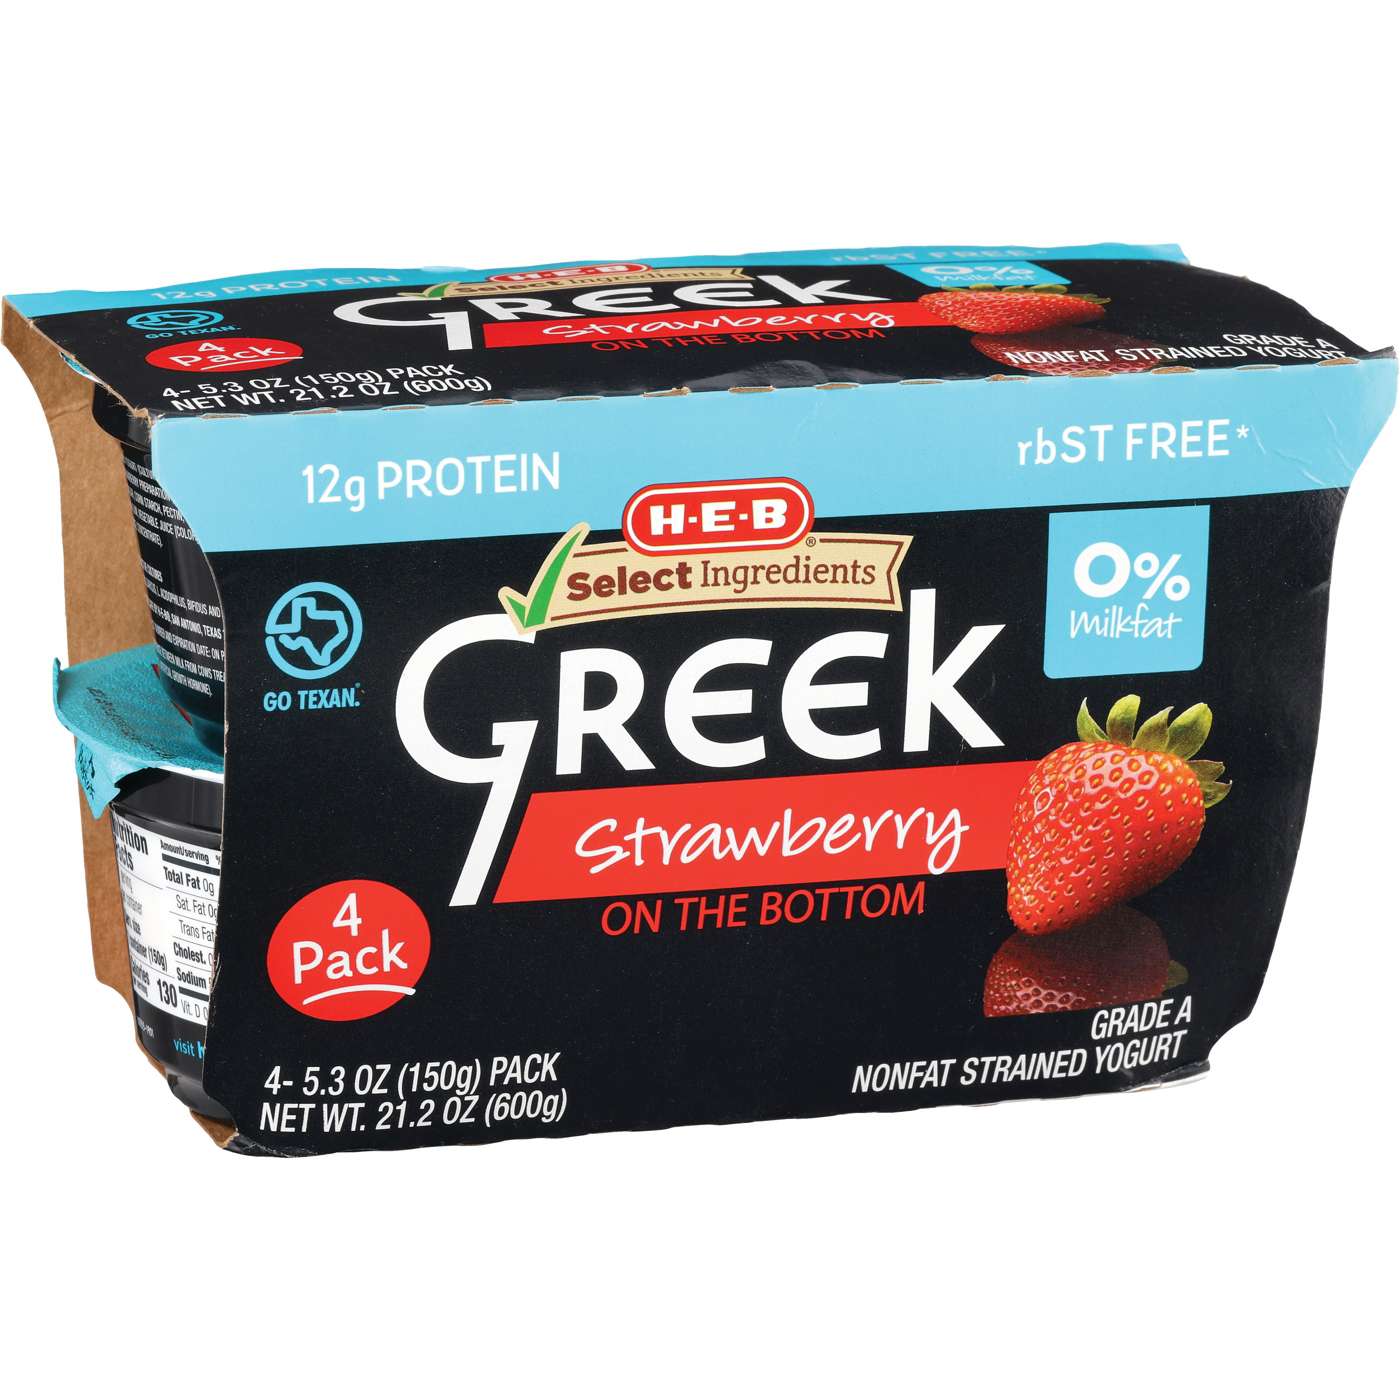 H-E-B 12g Protein Nonfat Greek Yogurt - Strawberry on the Bottom; image 2 of 2